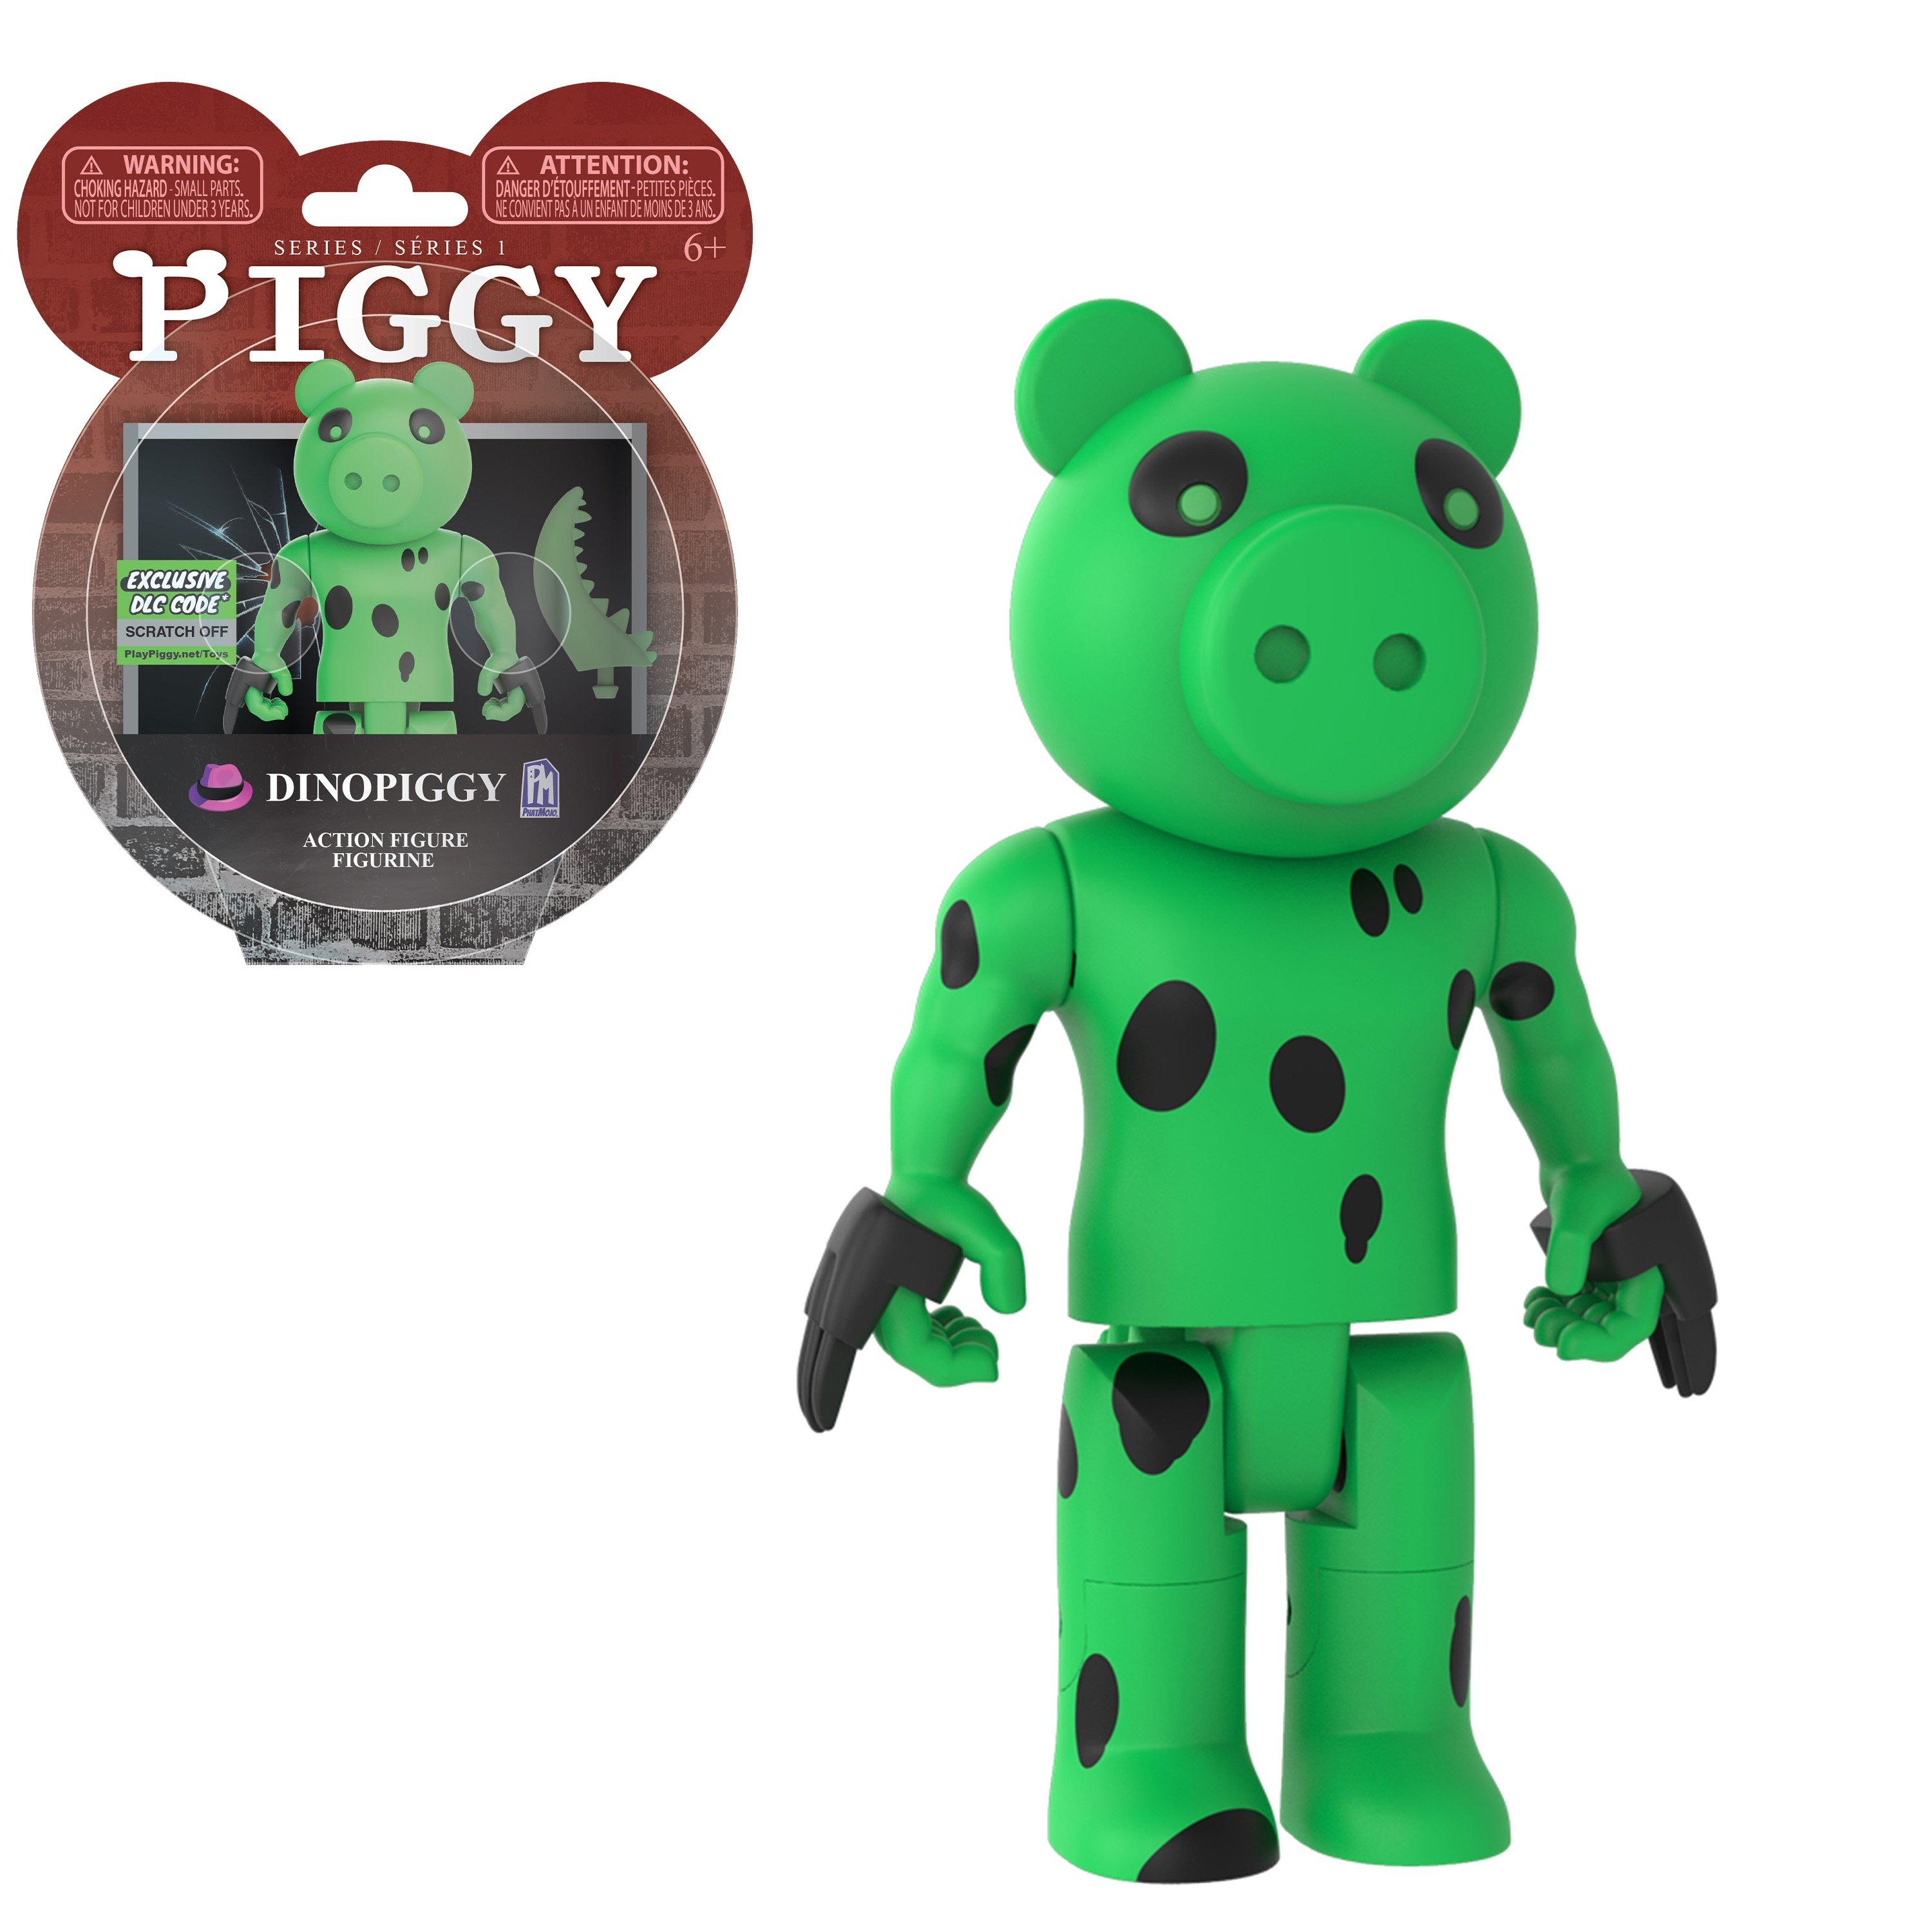 Piggy Dinopiggy Series 1 Action Figure Gamestop - where to buy roblox toys near me